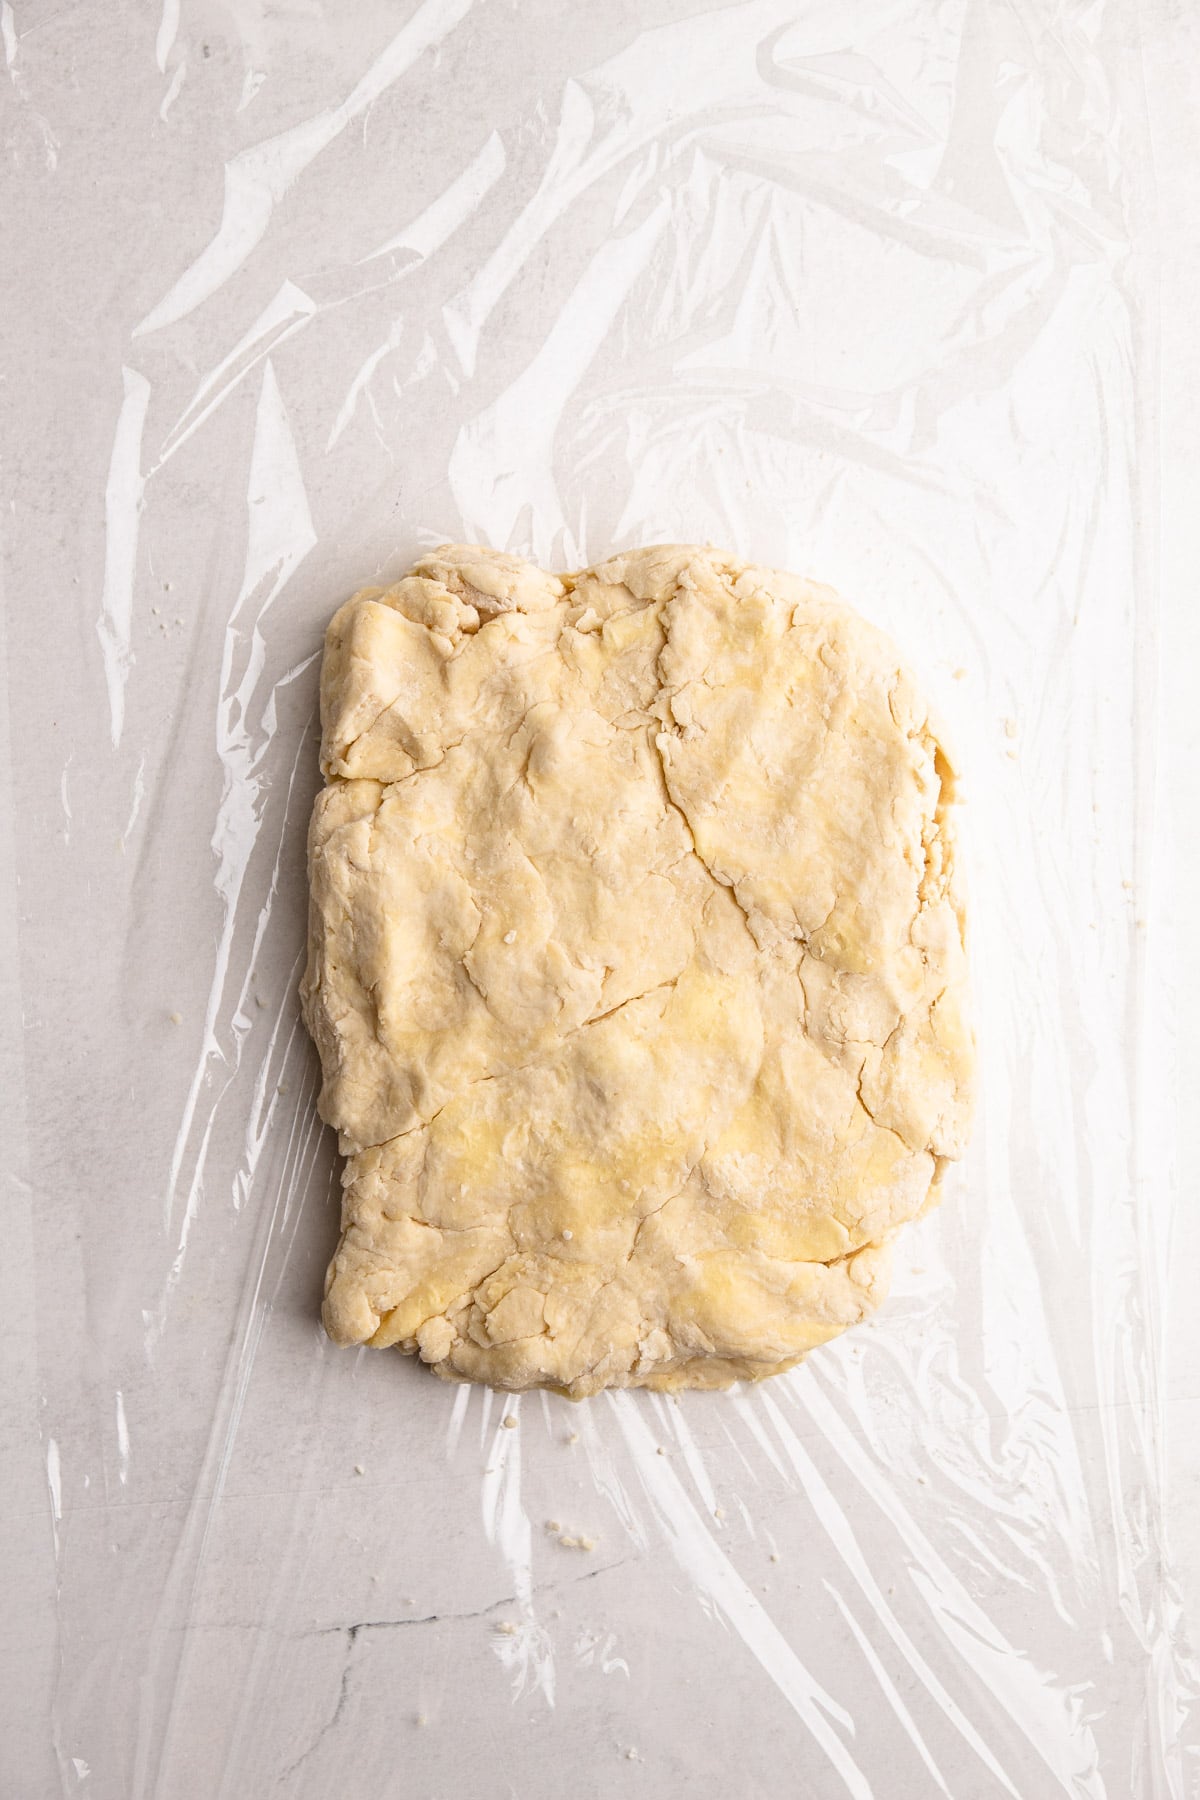 A rectangle of flaky pie dough.